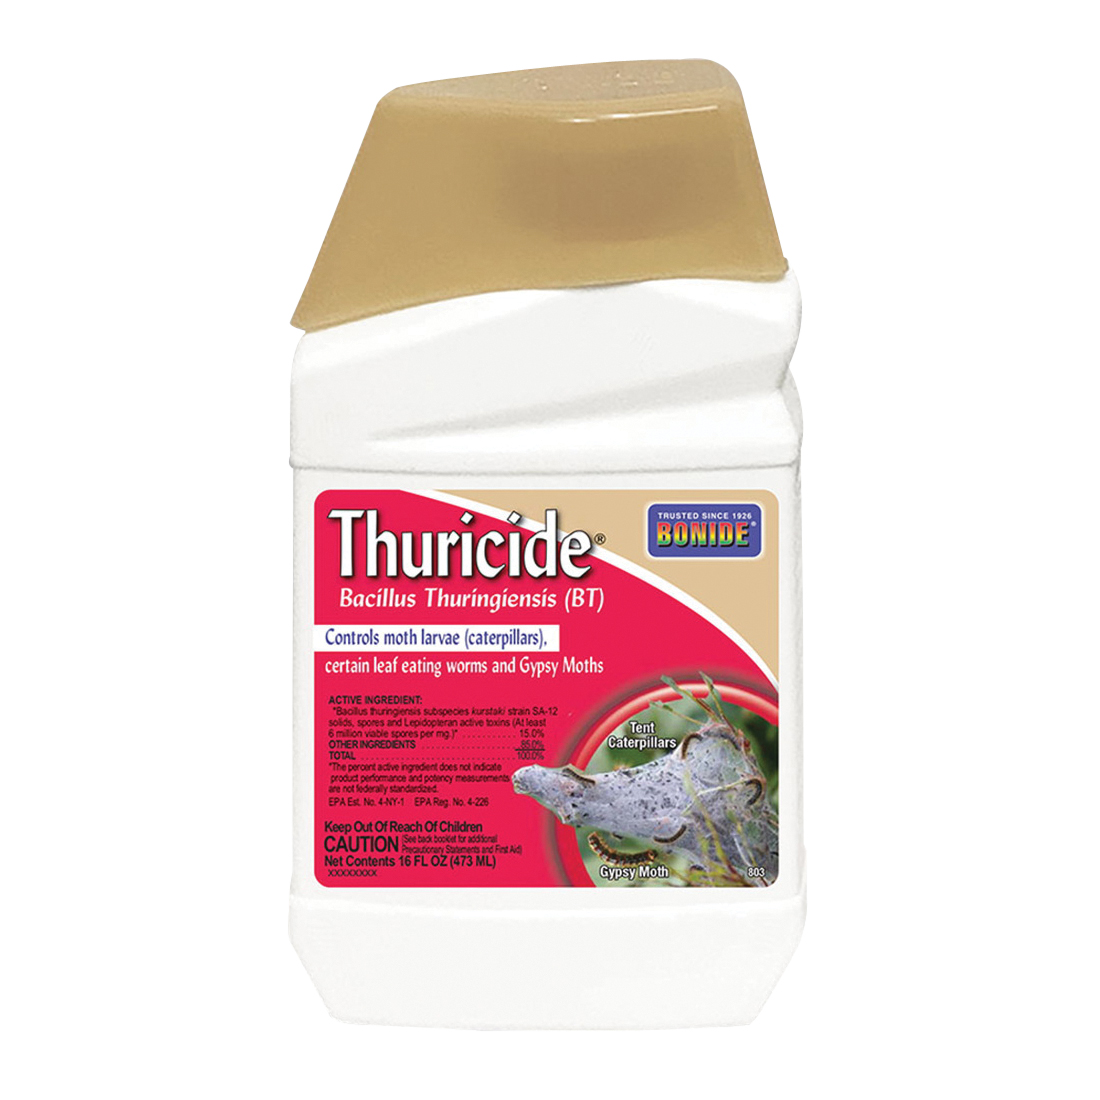 Thuricide (BT 803 Thuricide Bacillus Thuringiensis, Liquid, 1 pt Bottle